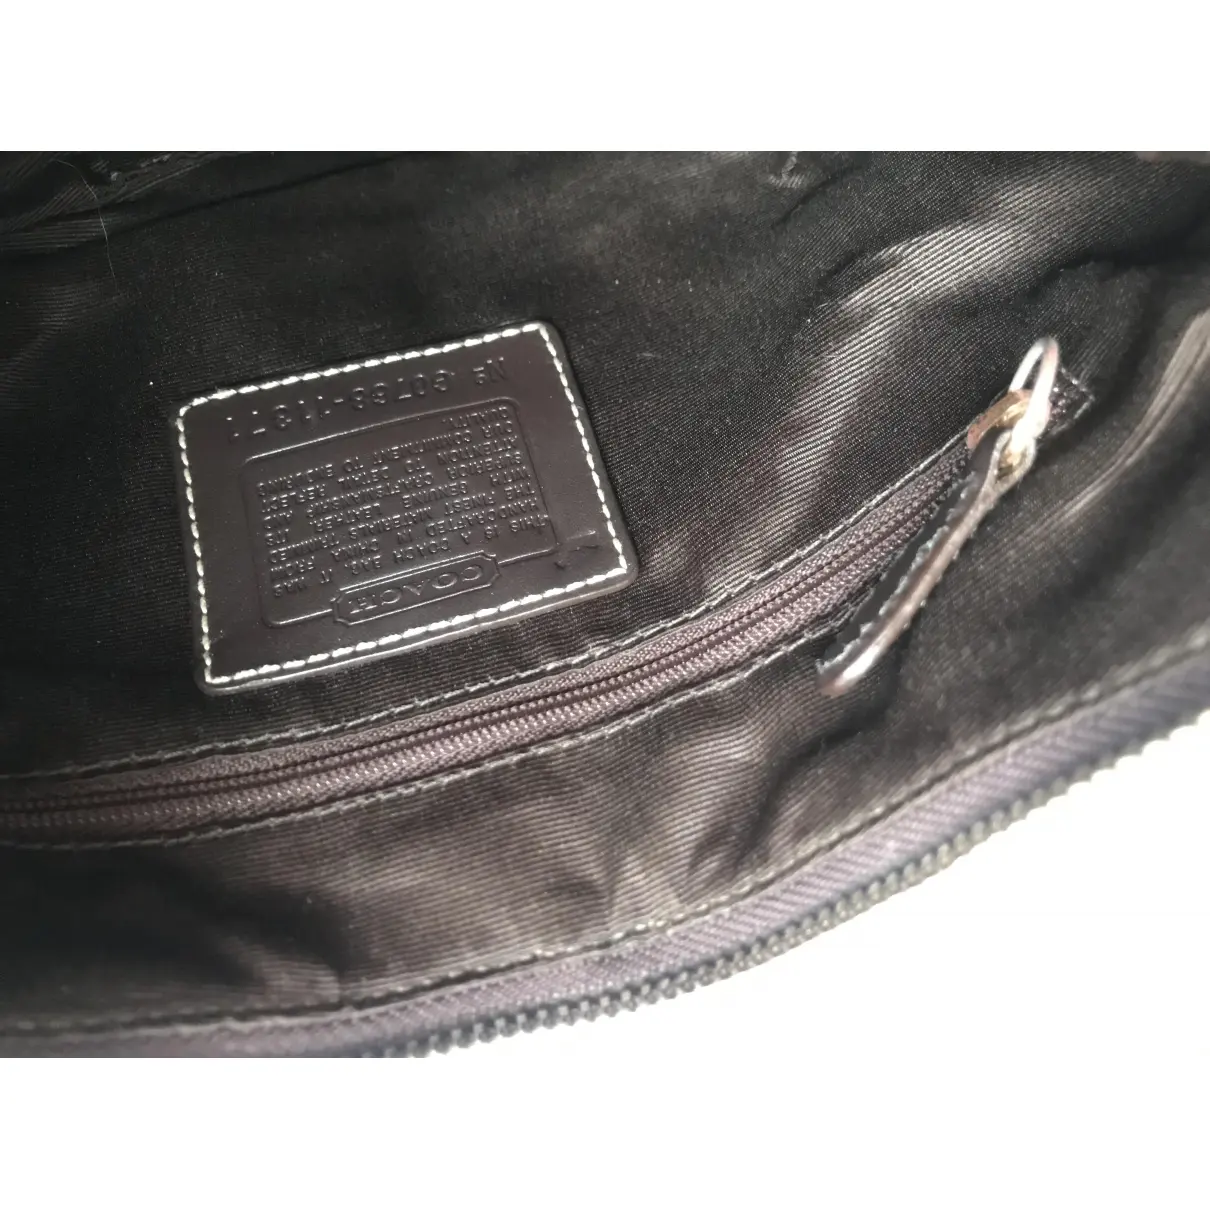 Signature Sufflette leather handbag Coach